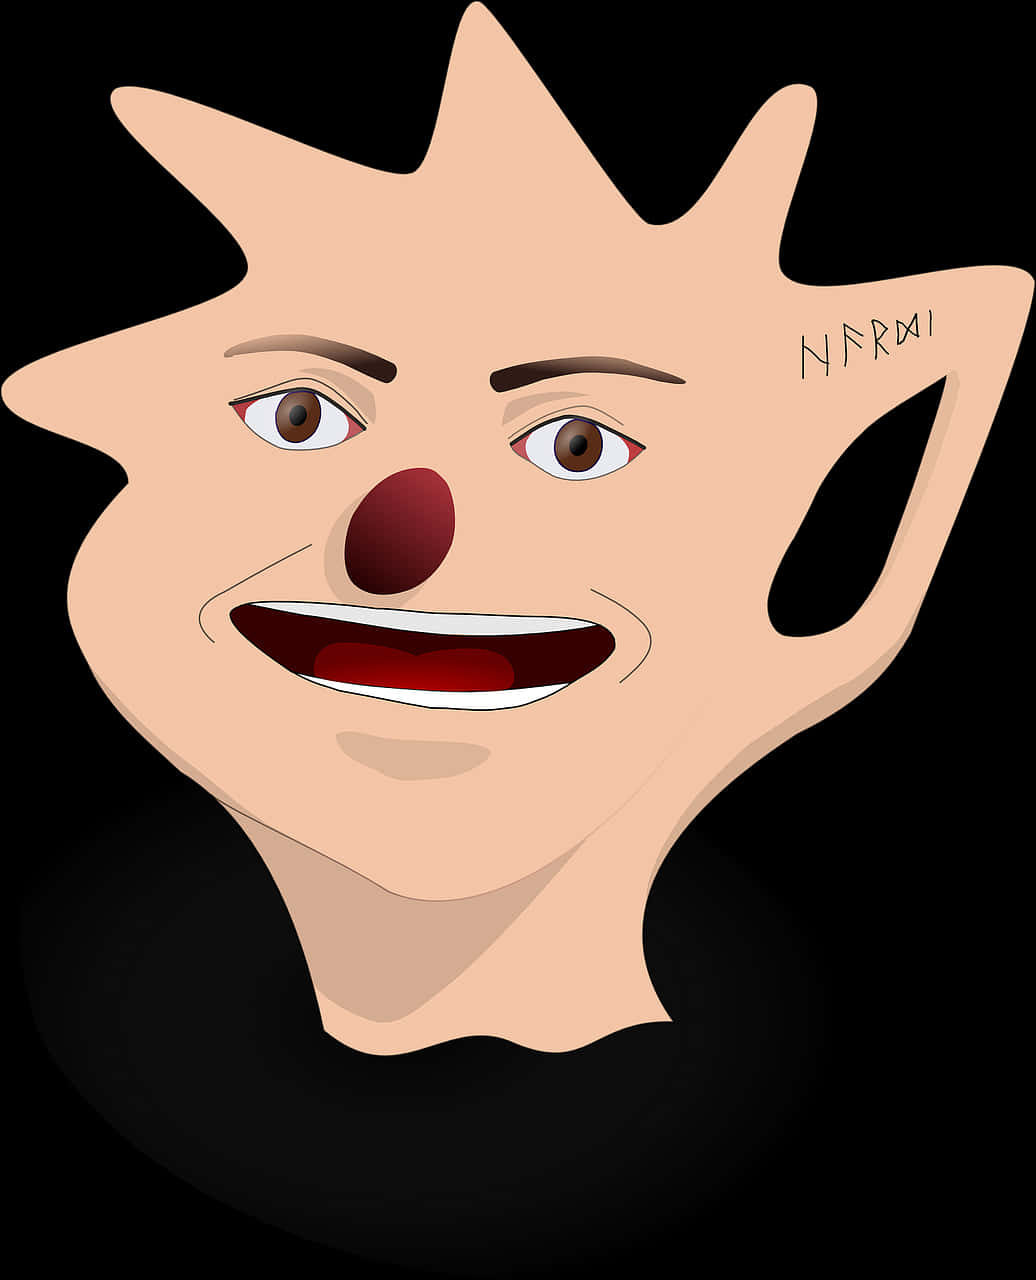 Abstract Clown Face Art.jpg PNG image